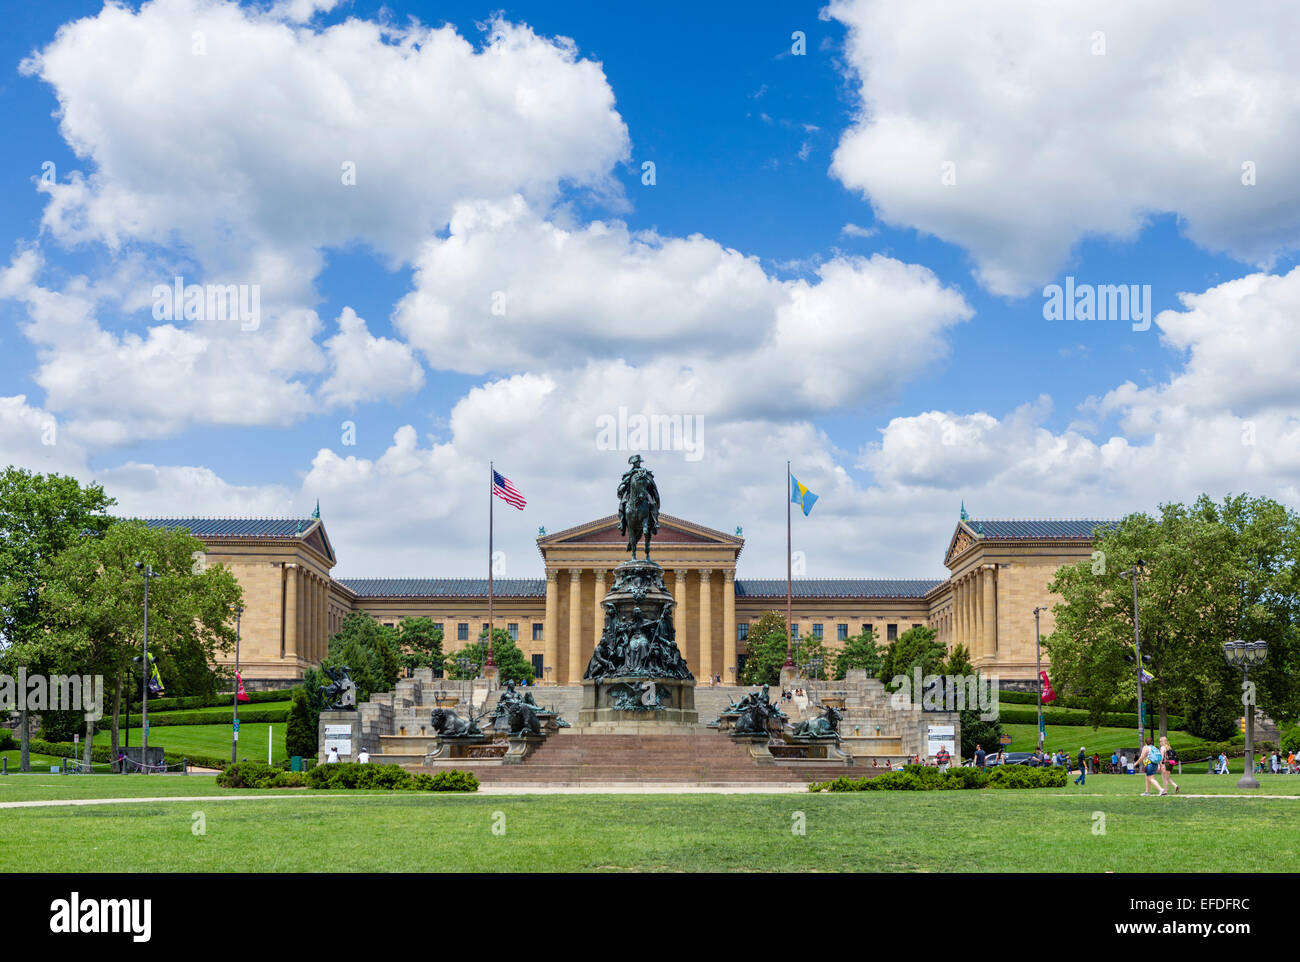 Il monumento a George Washington in Eakins ovale nella parte anteriore del Philadelphia Museum of Art, Fairmount Park, Philadelphia, Pennsylvania, STATI UNITI D'AMERICA Foto Stock